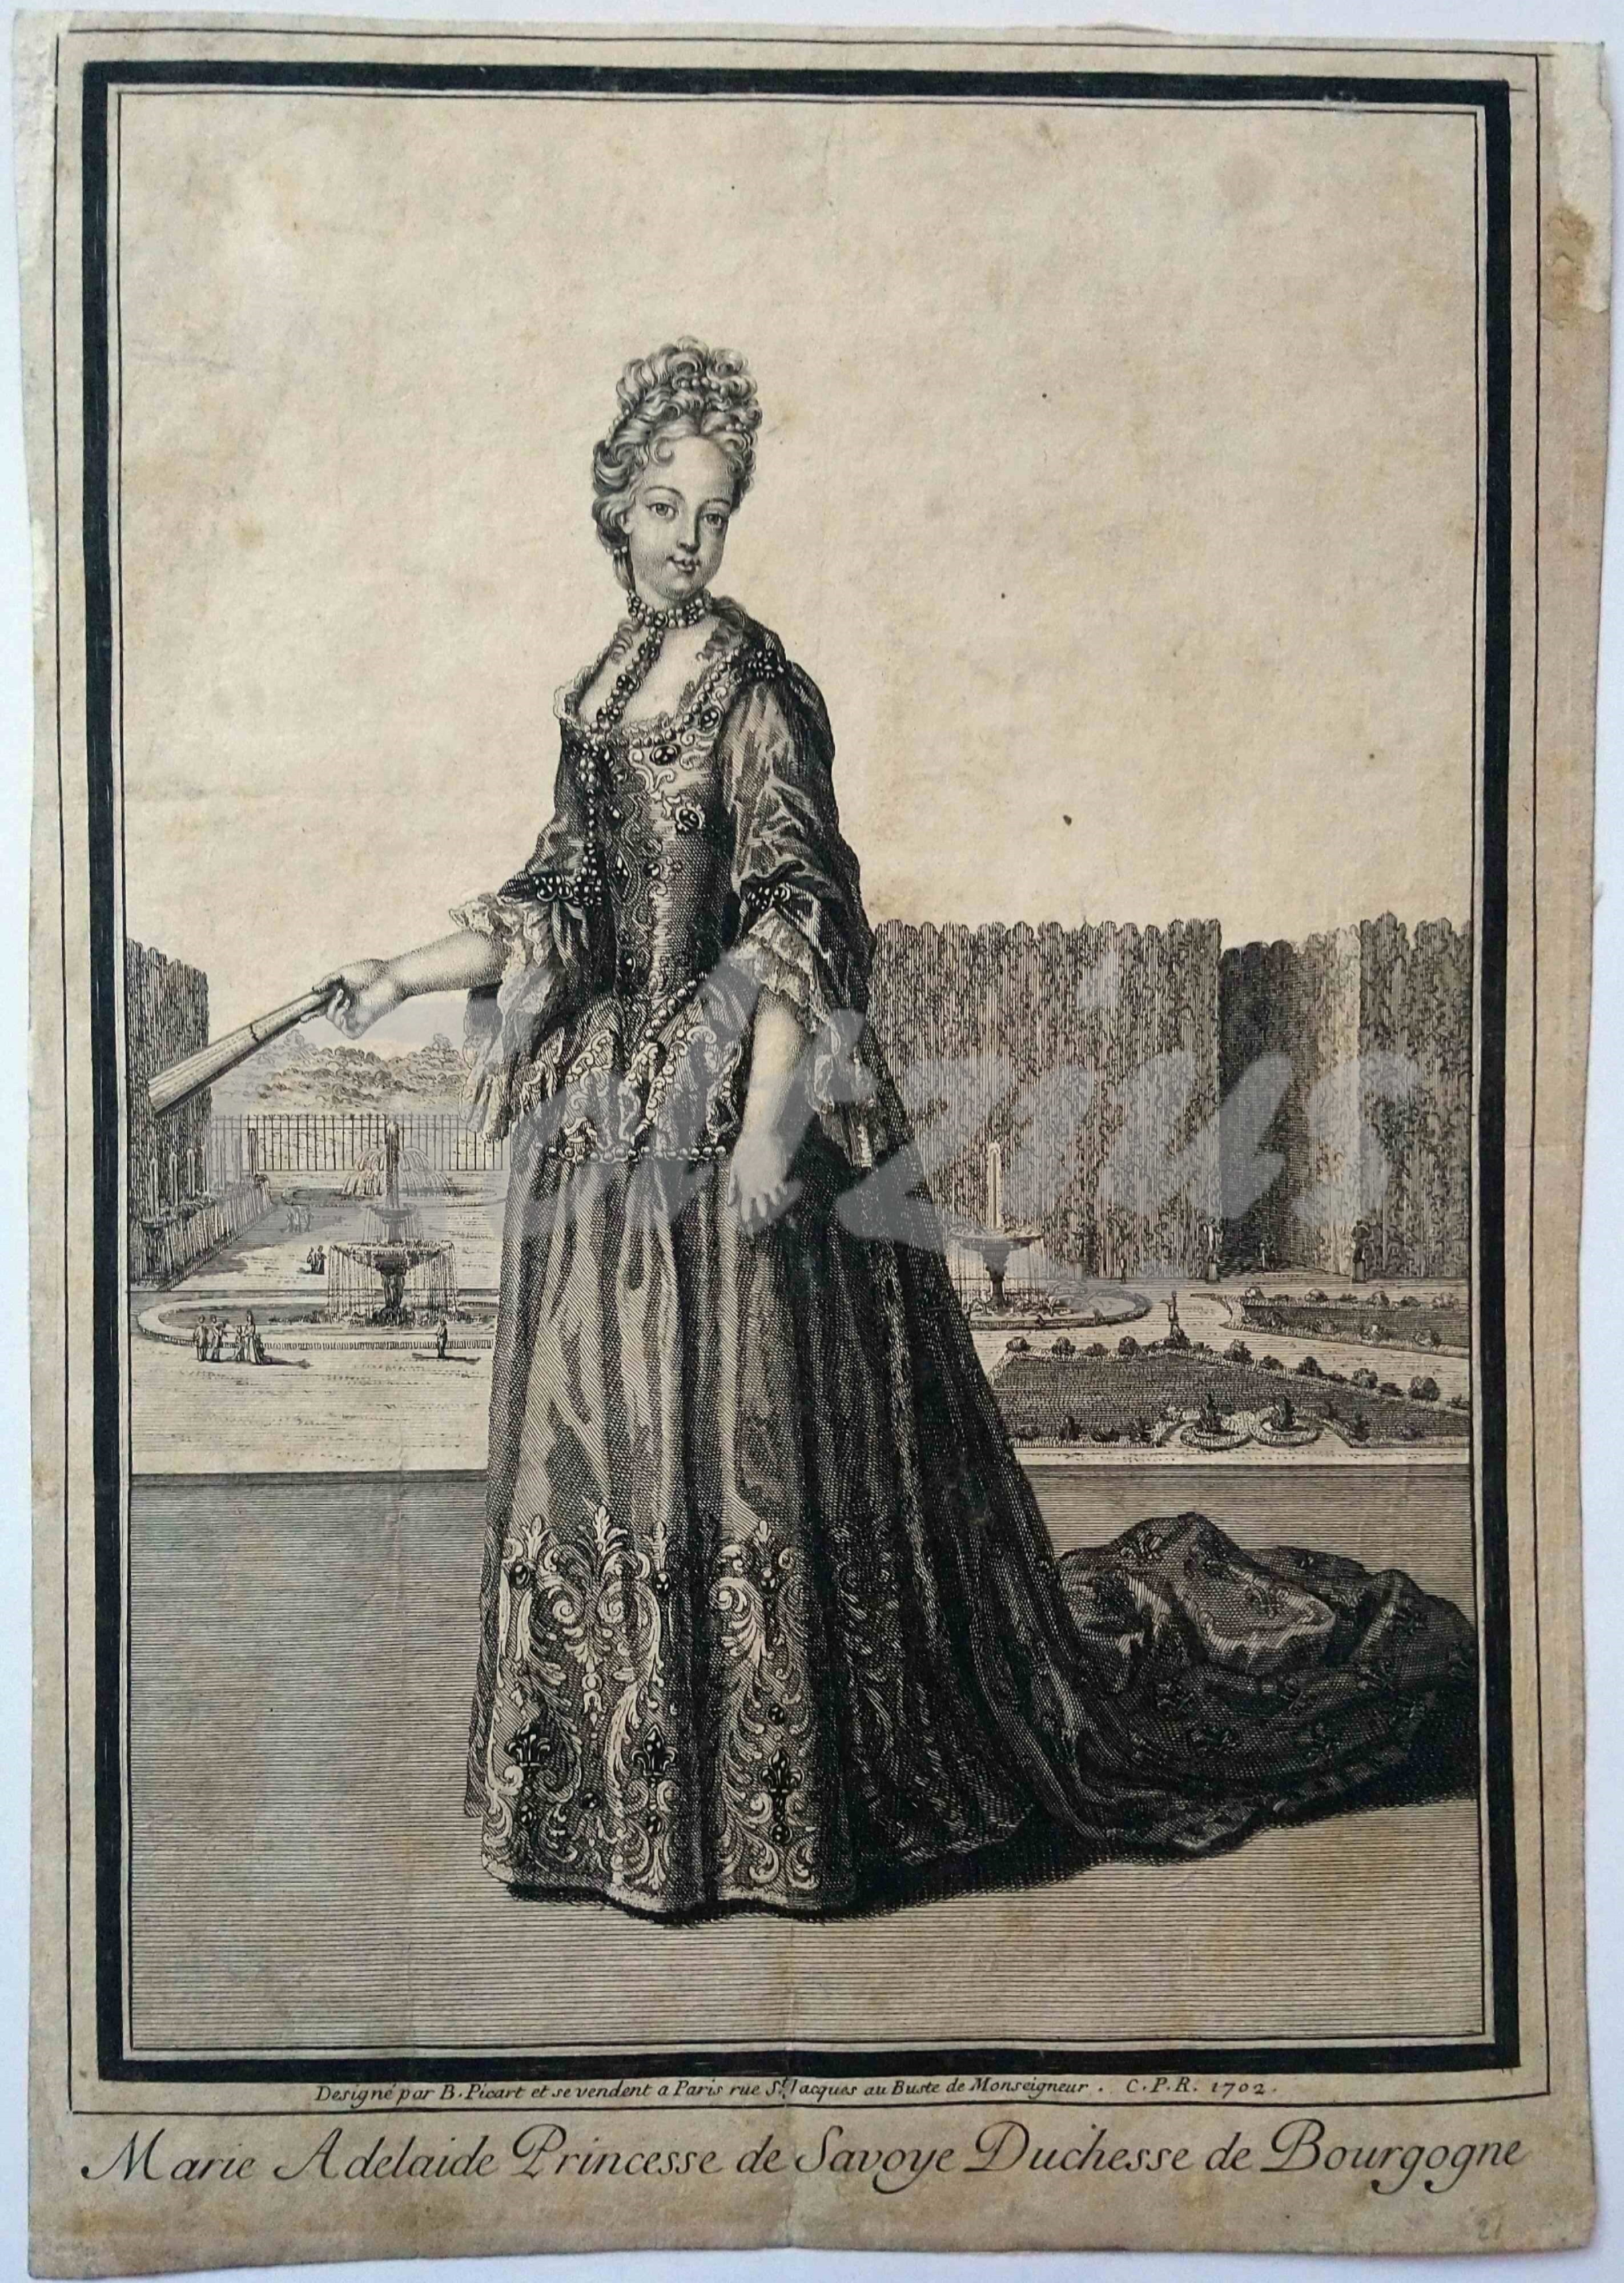 PICART, BERNARD (1673-1733), Marie Adelaide Princesse de Savoye Duchesse de Bourgogne